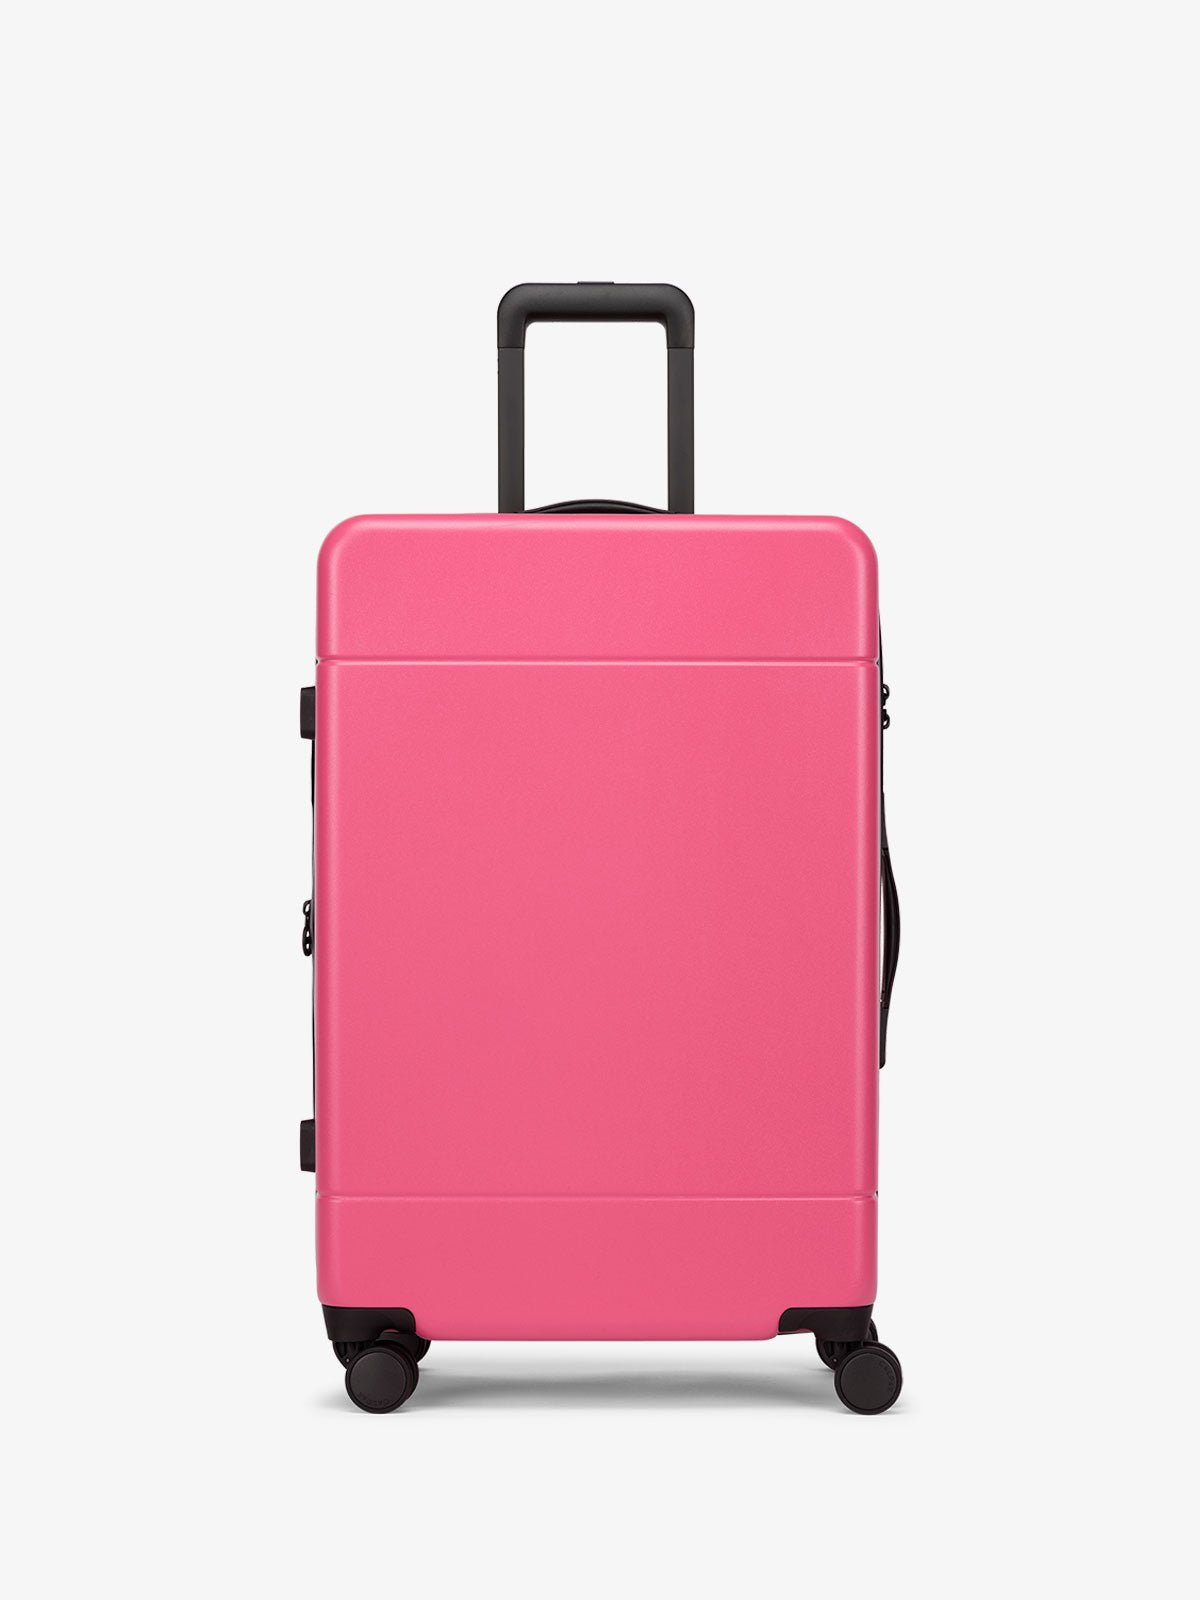 Hue medium 26 inch hardside luggage in pink dragonfruit